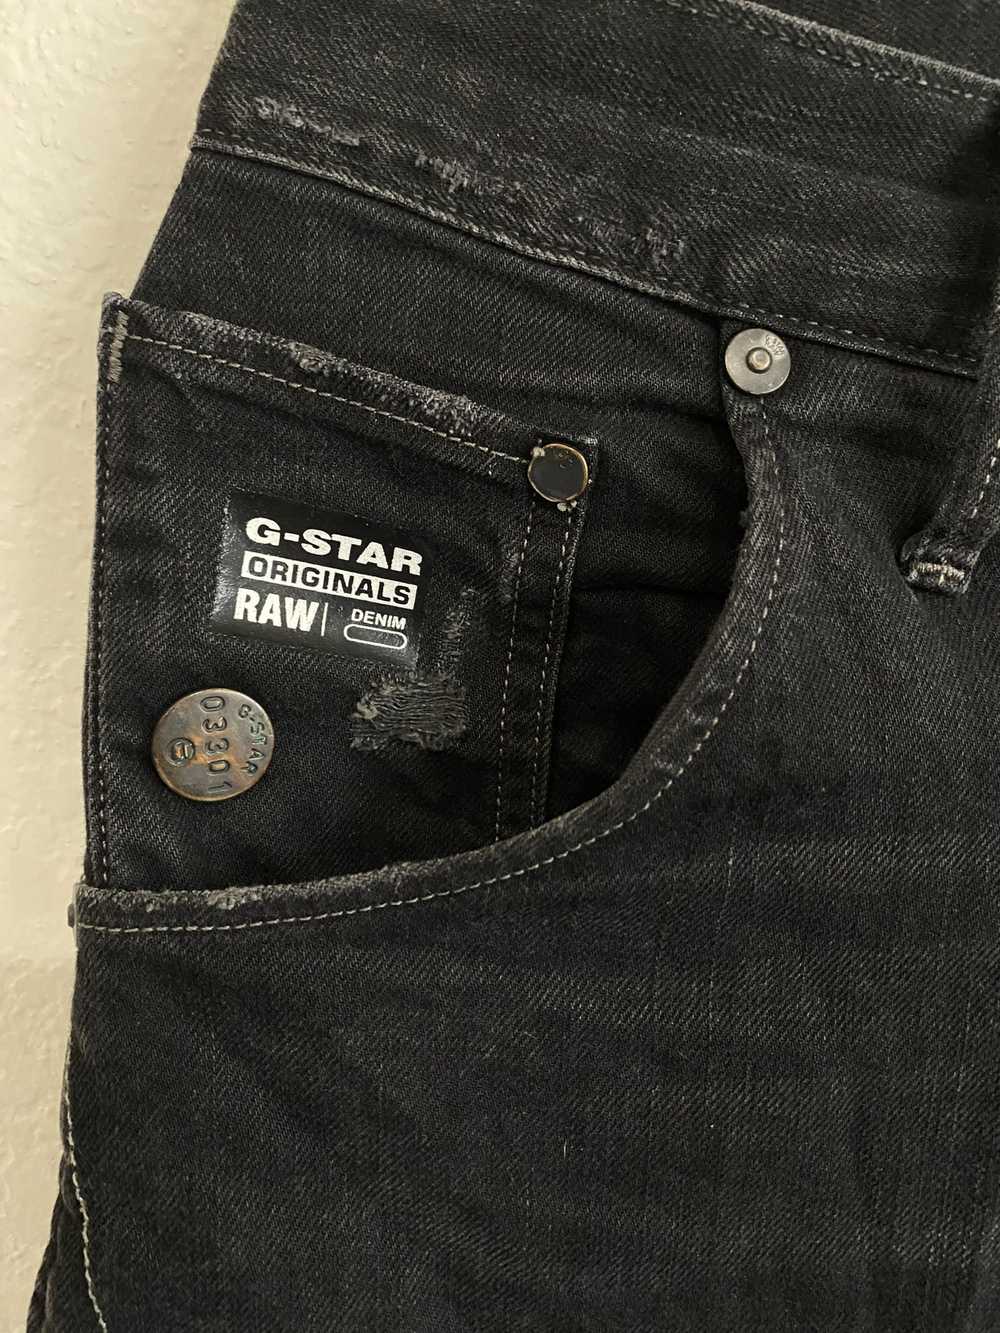 G Star Raw Gstar Originals Raw Jeans - image 4